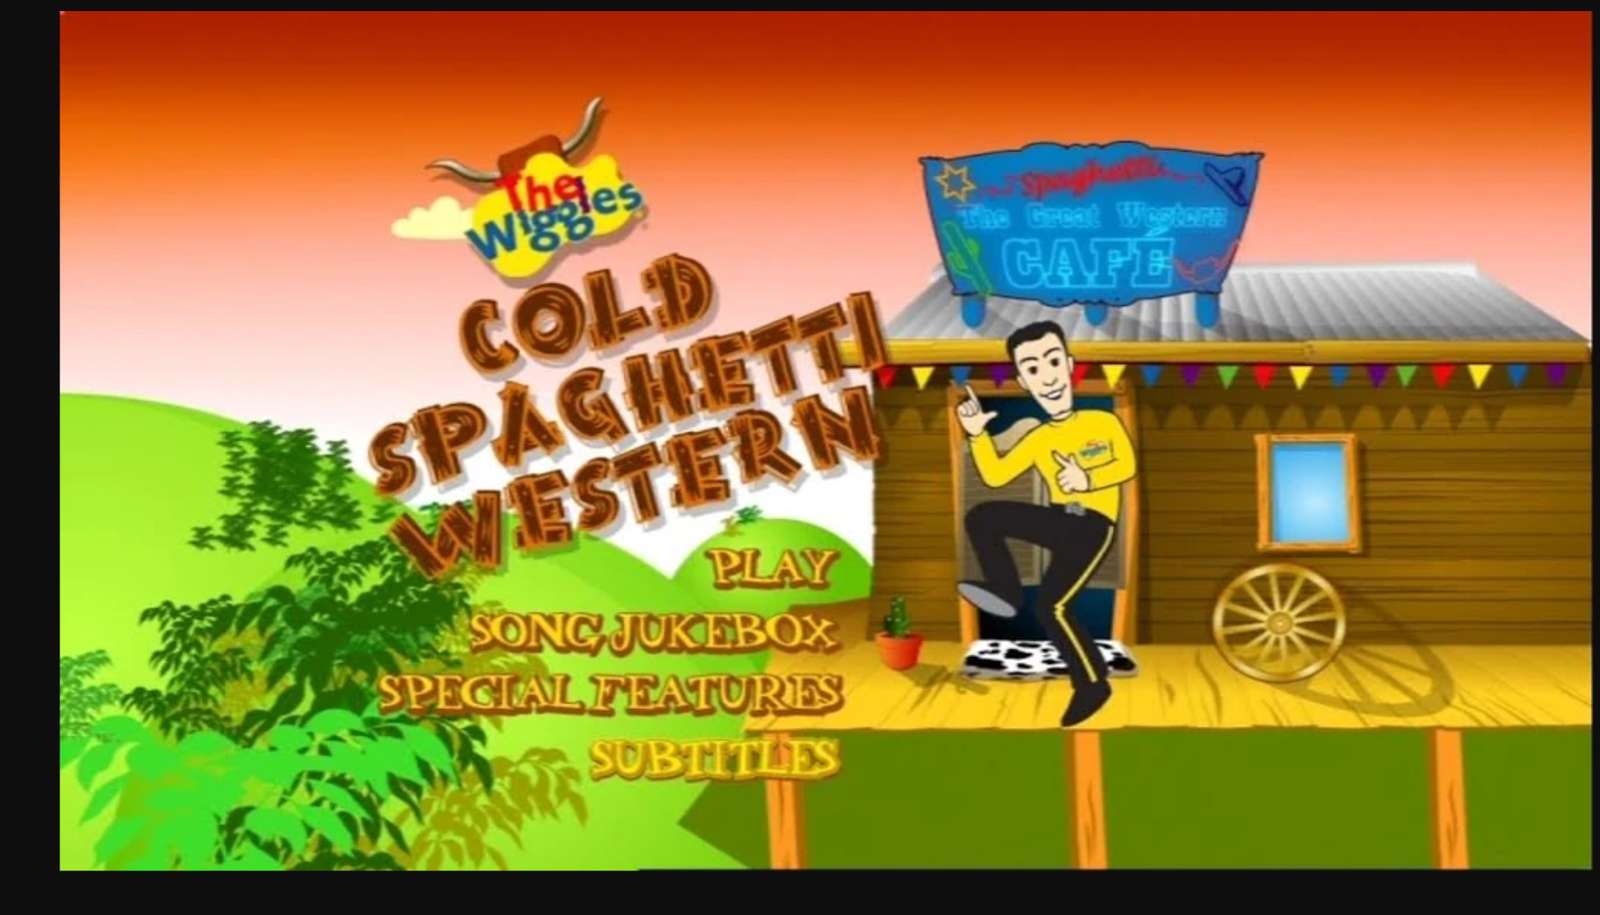 Cold Spaghetti Western DVD Menu Wiggles 2004 Pussel online